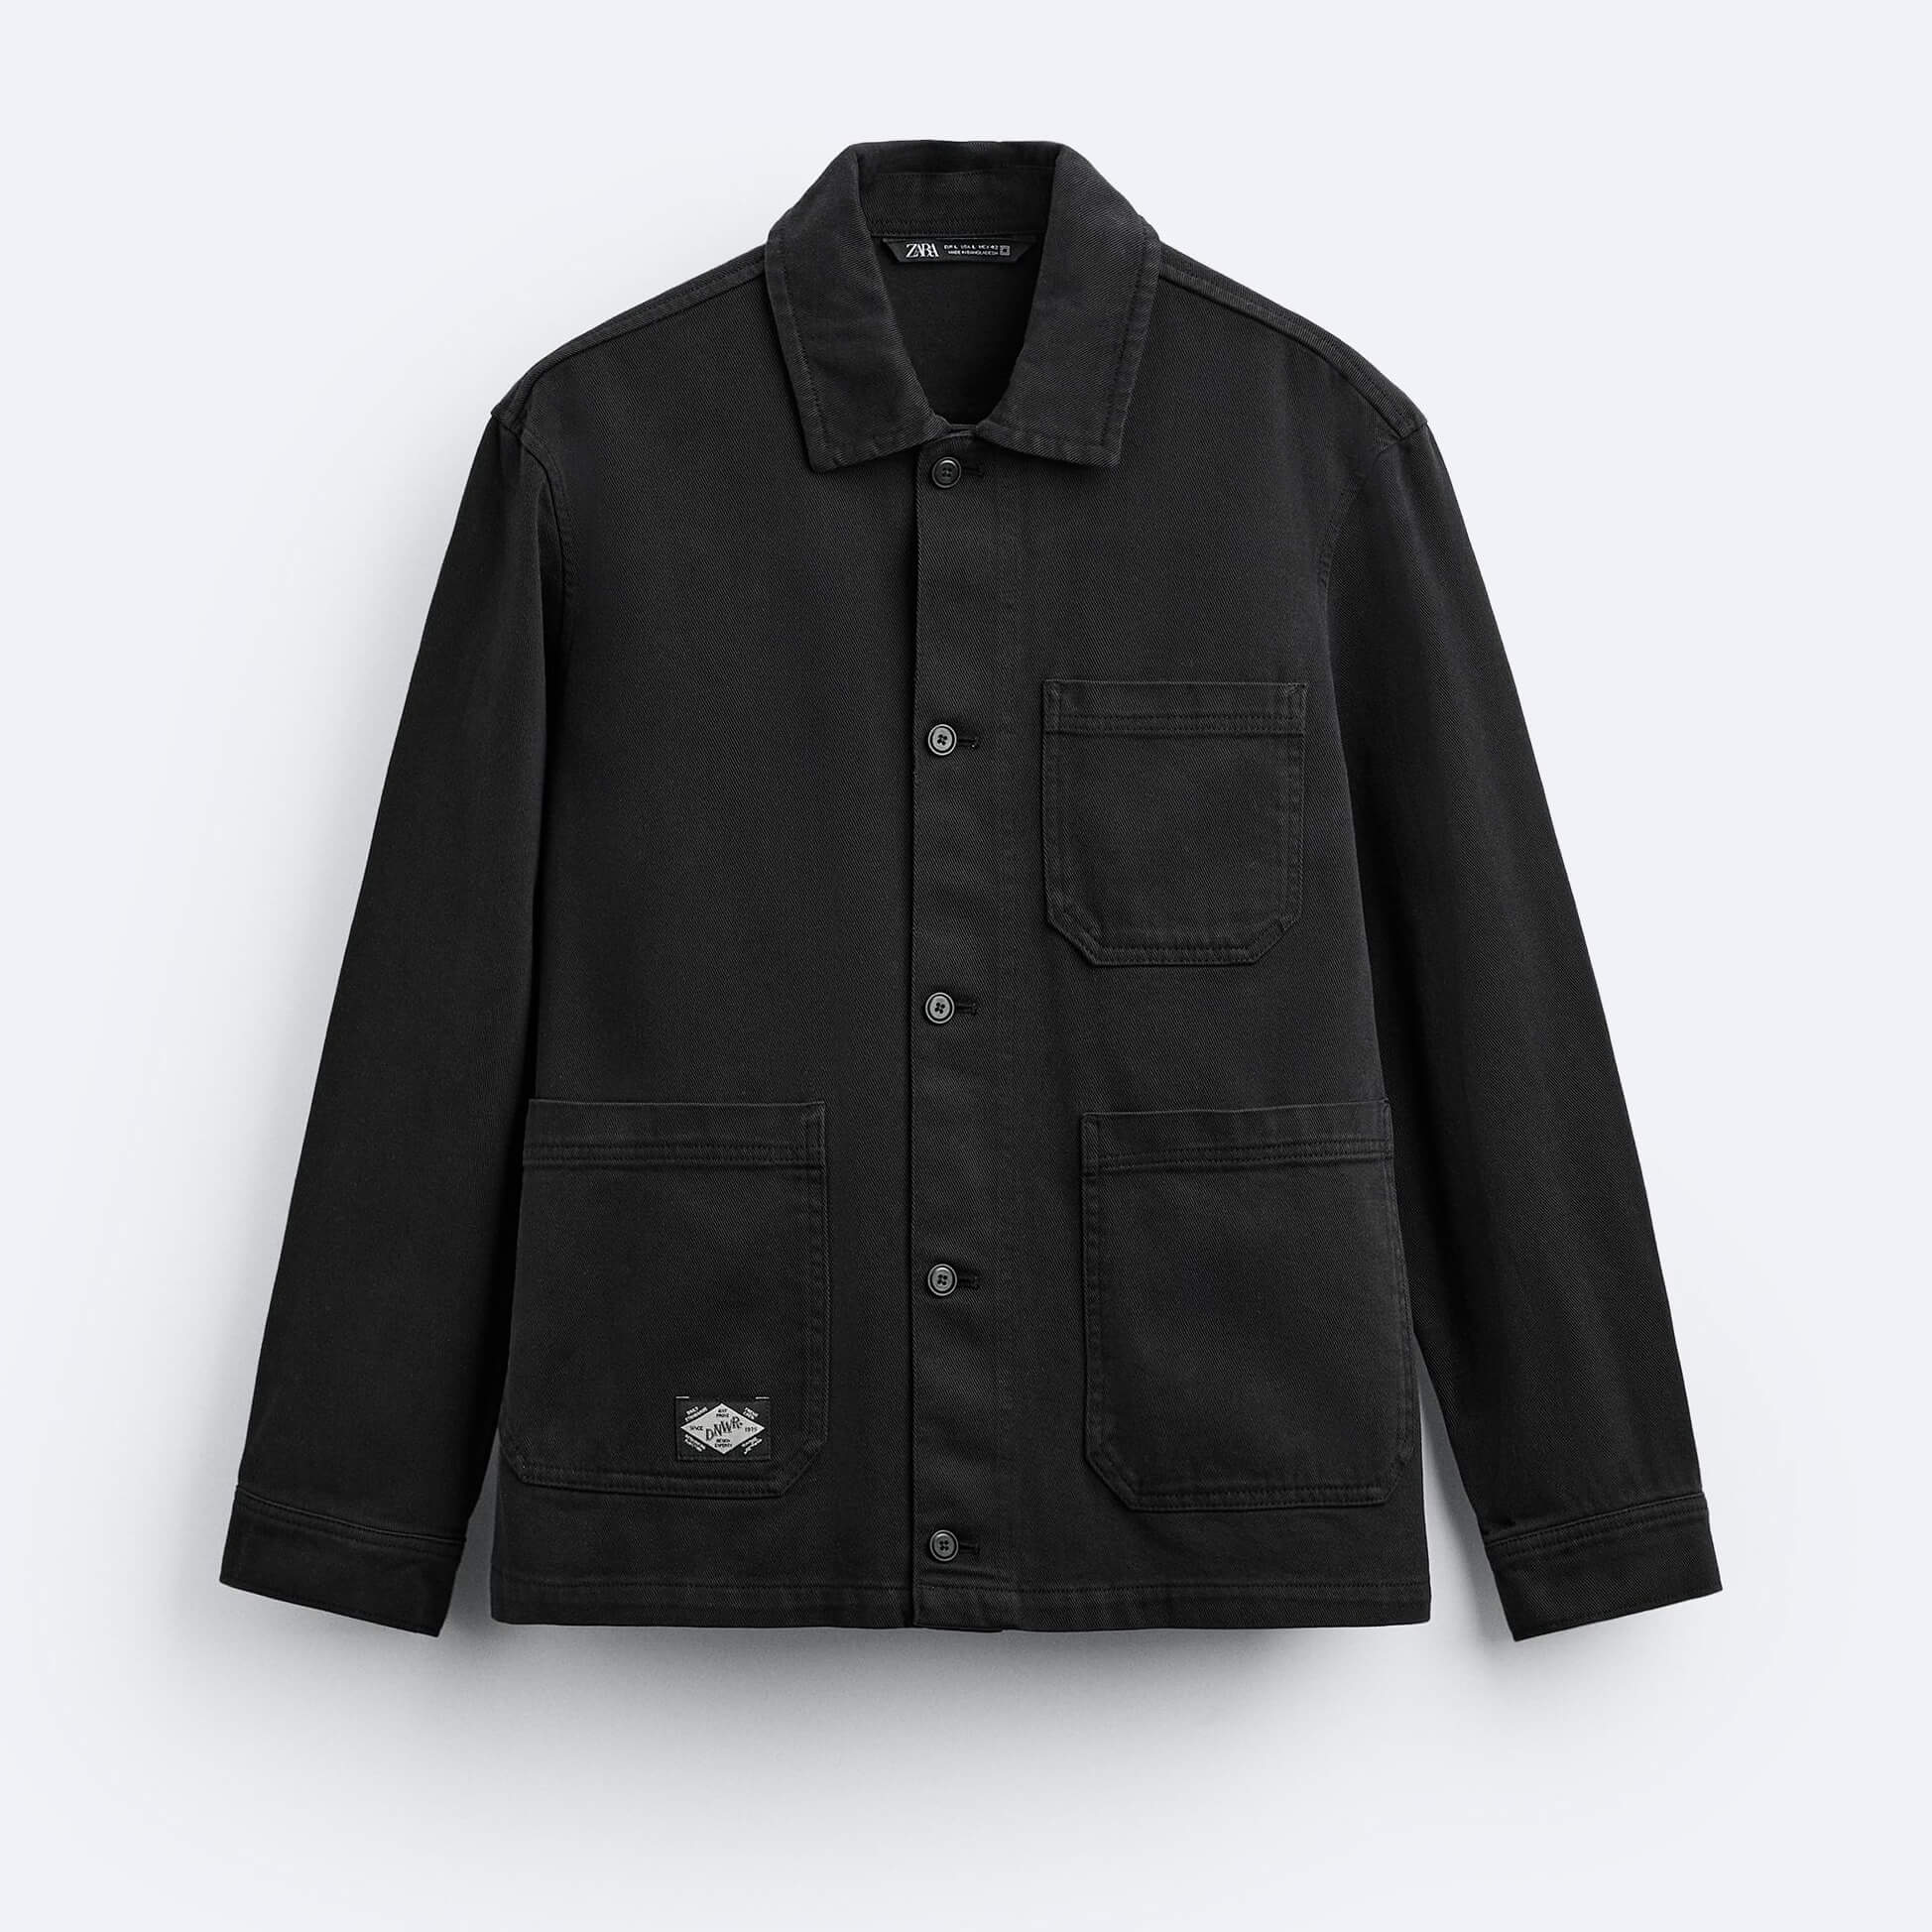 Рубашка верхняя Zara Textured, черный куртка рубашка zara textured фуксия